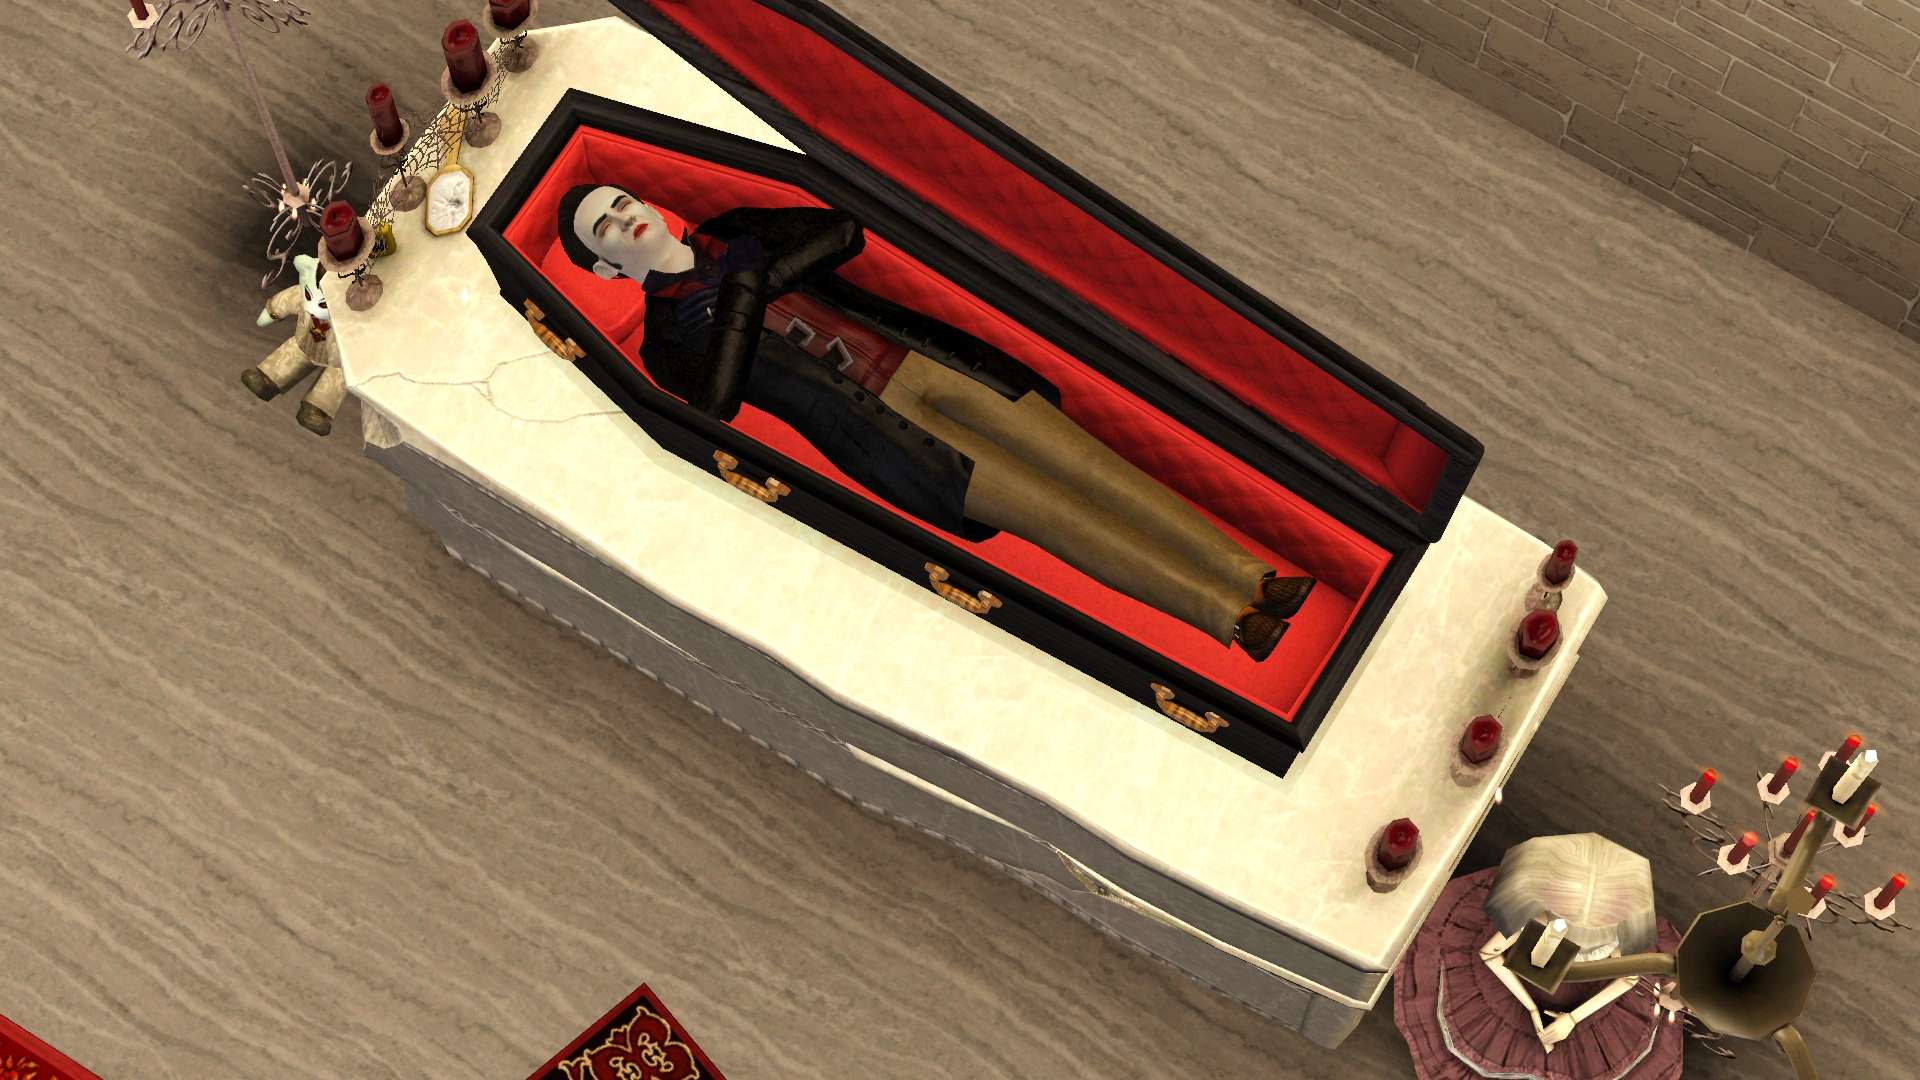 Why do vampires sleep in coffins